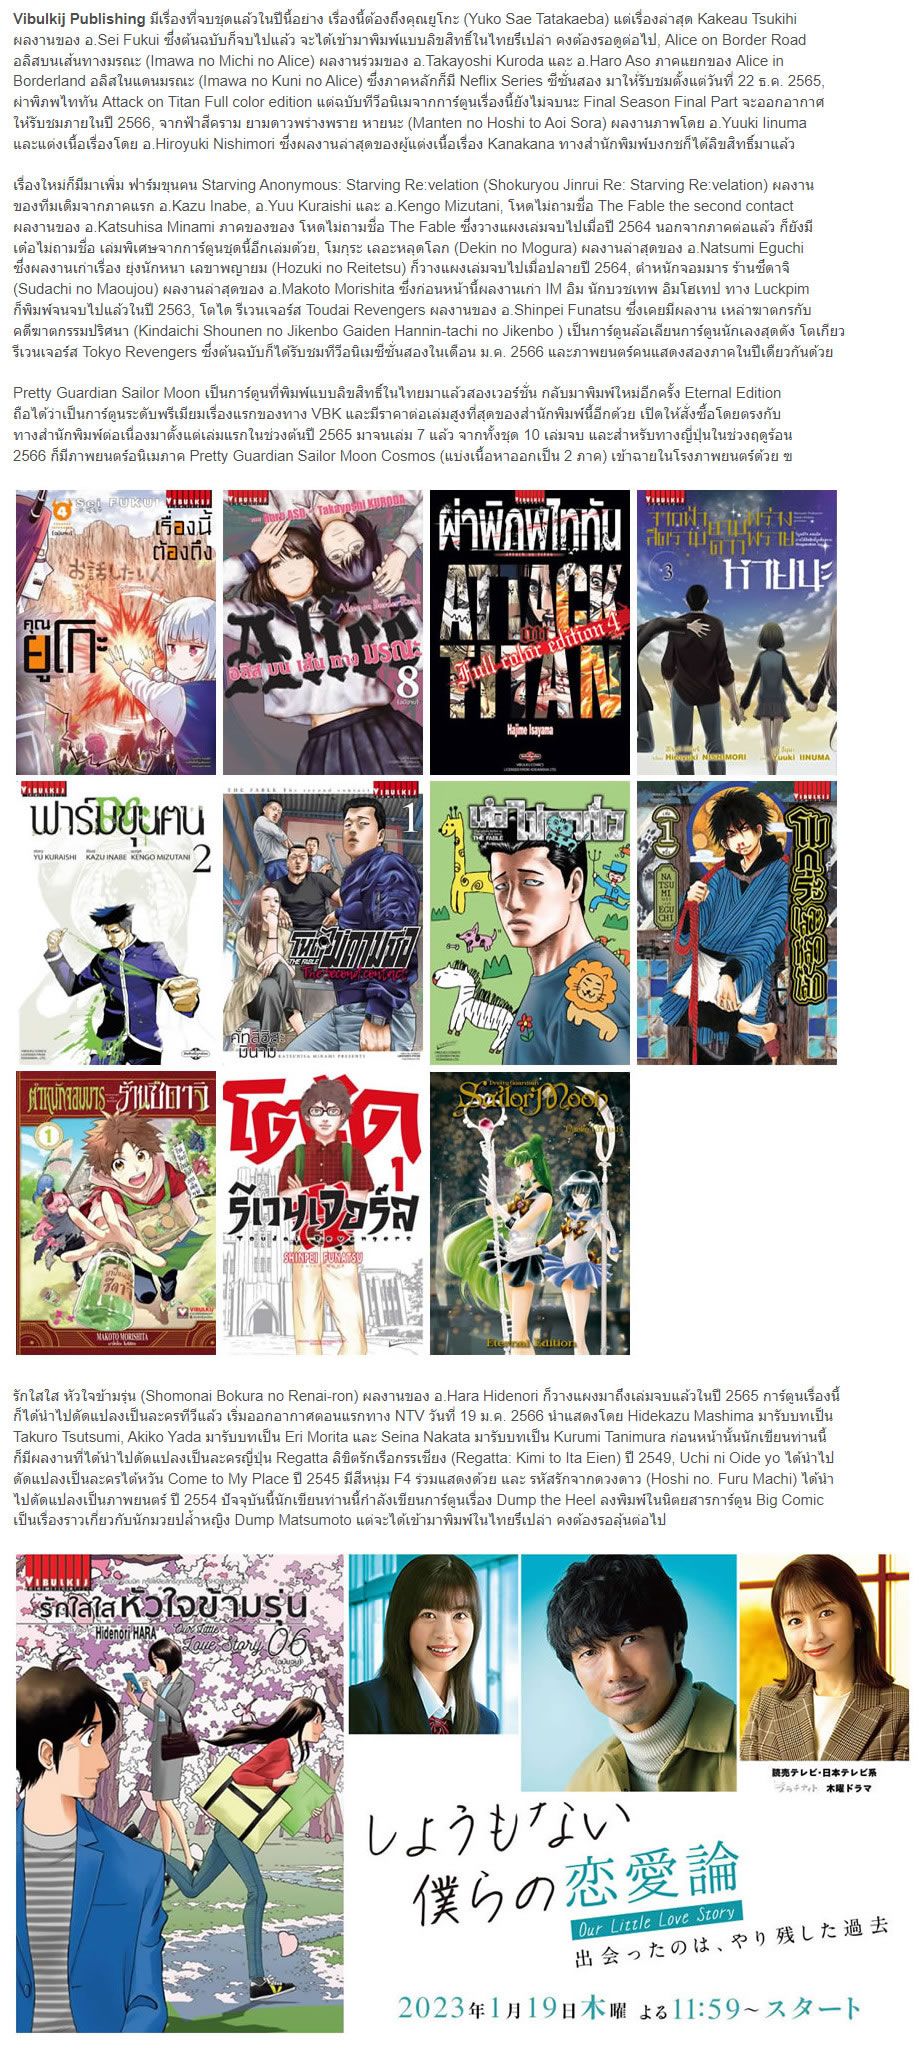 Kinsou no Vermeil 5 comic manga anime Yoko Umezu Japanese Book